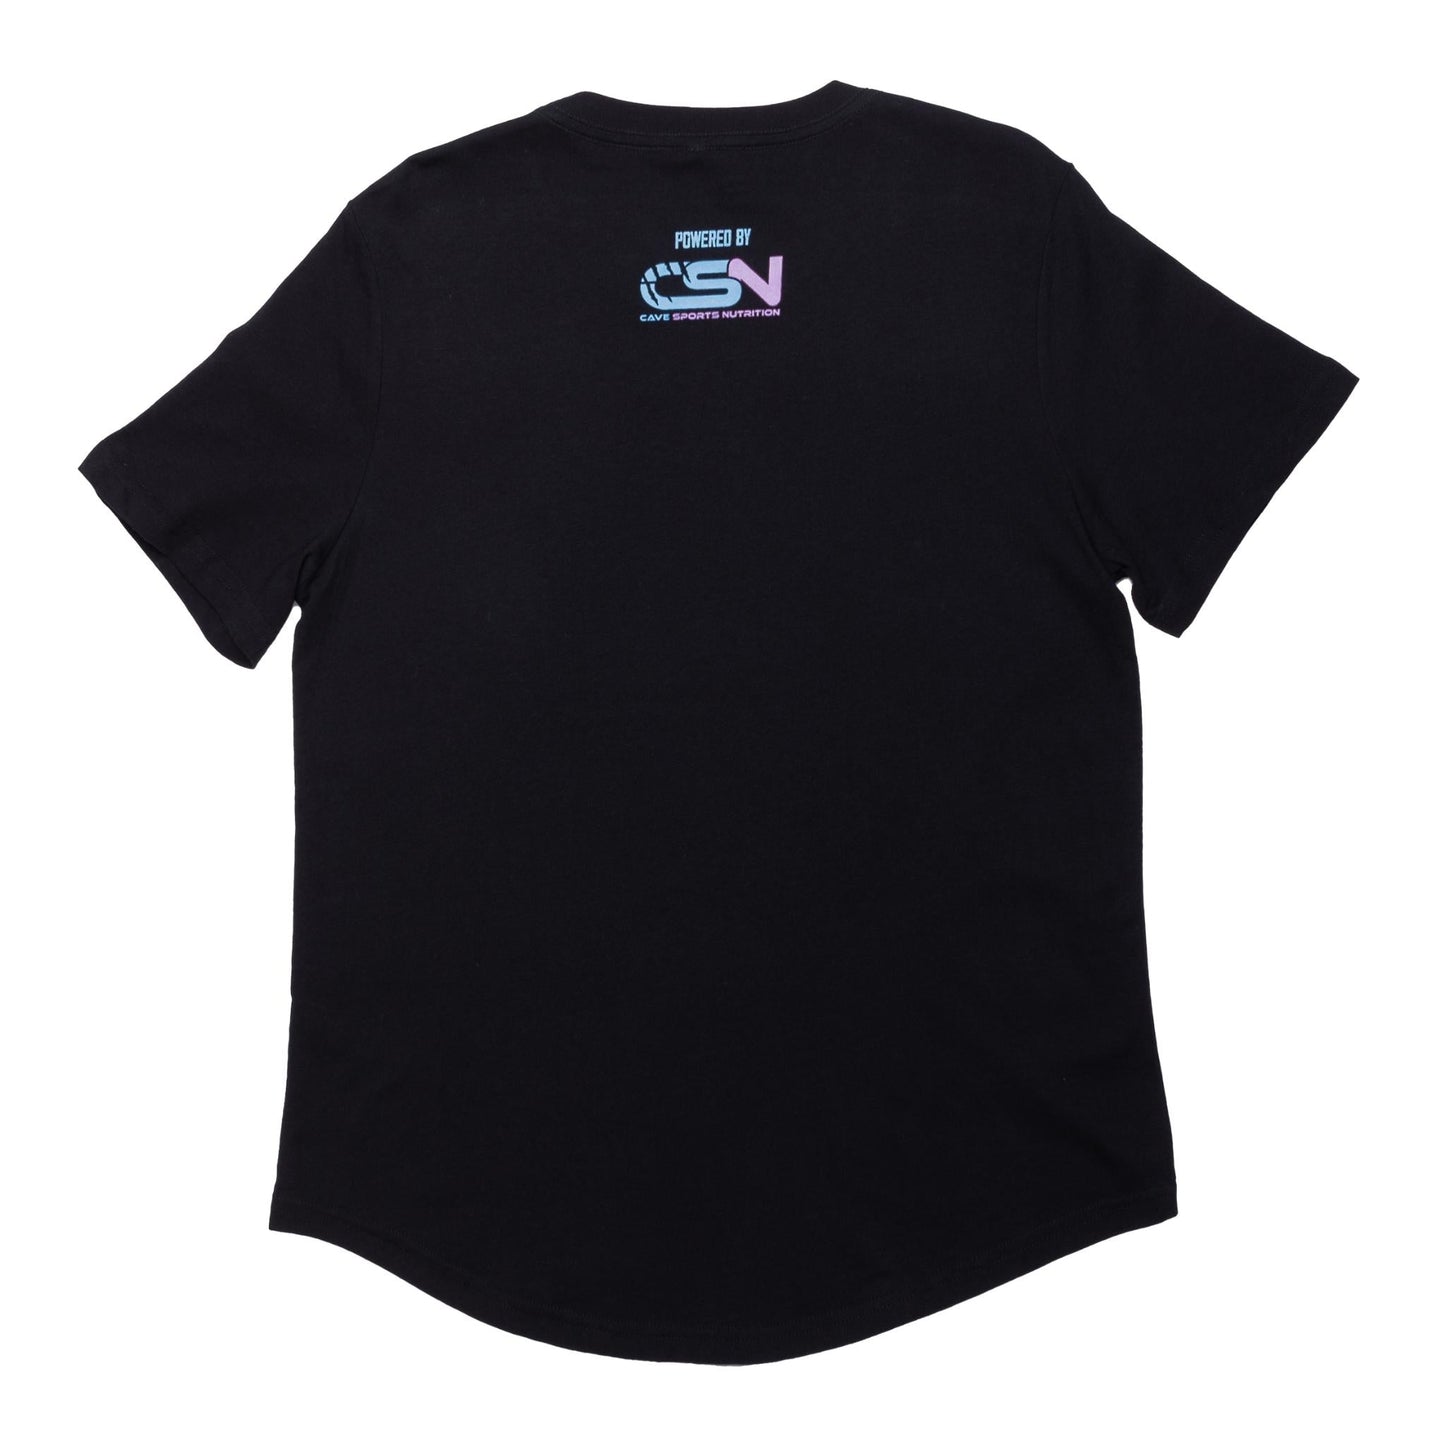 Cave Gym Women's Drop T-Shirt Black - Merchandise - X-Small - The Cave Gym